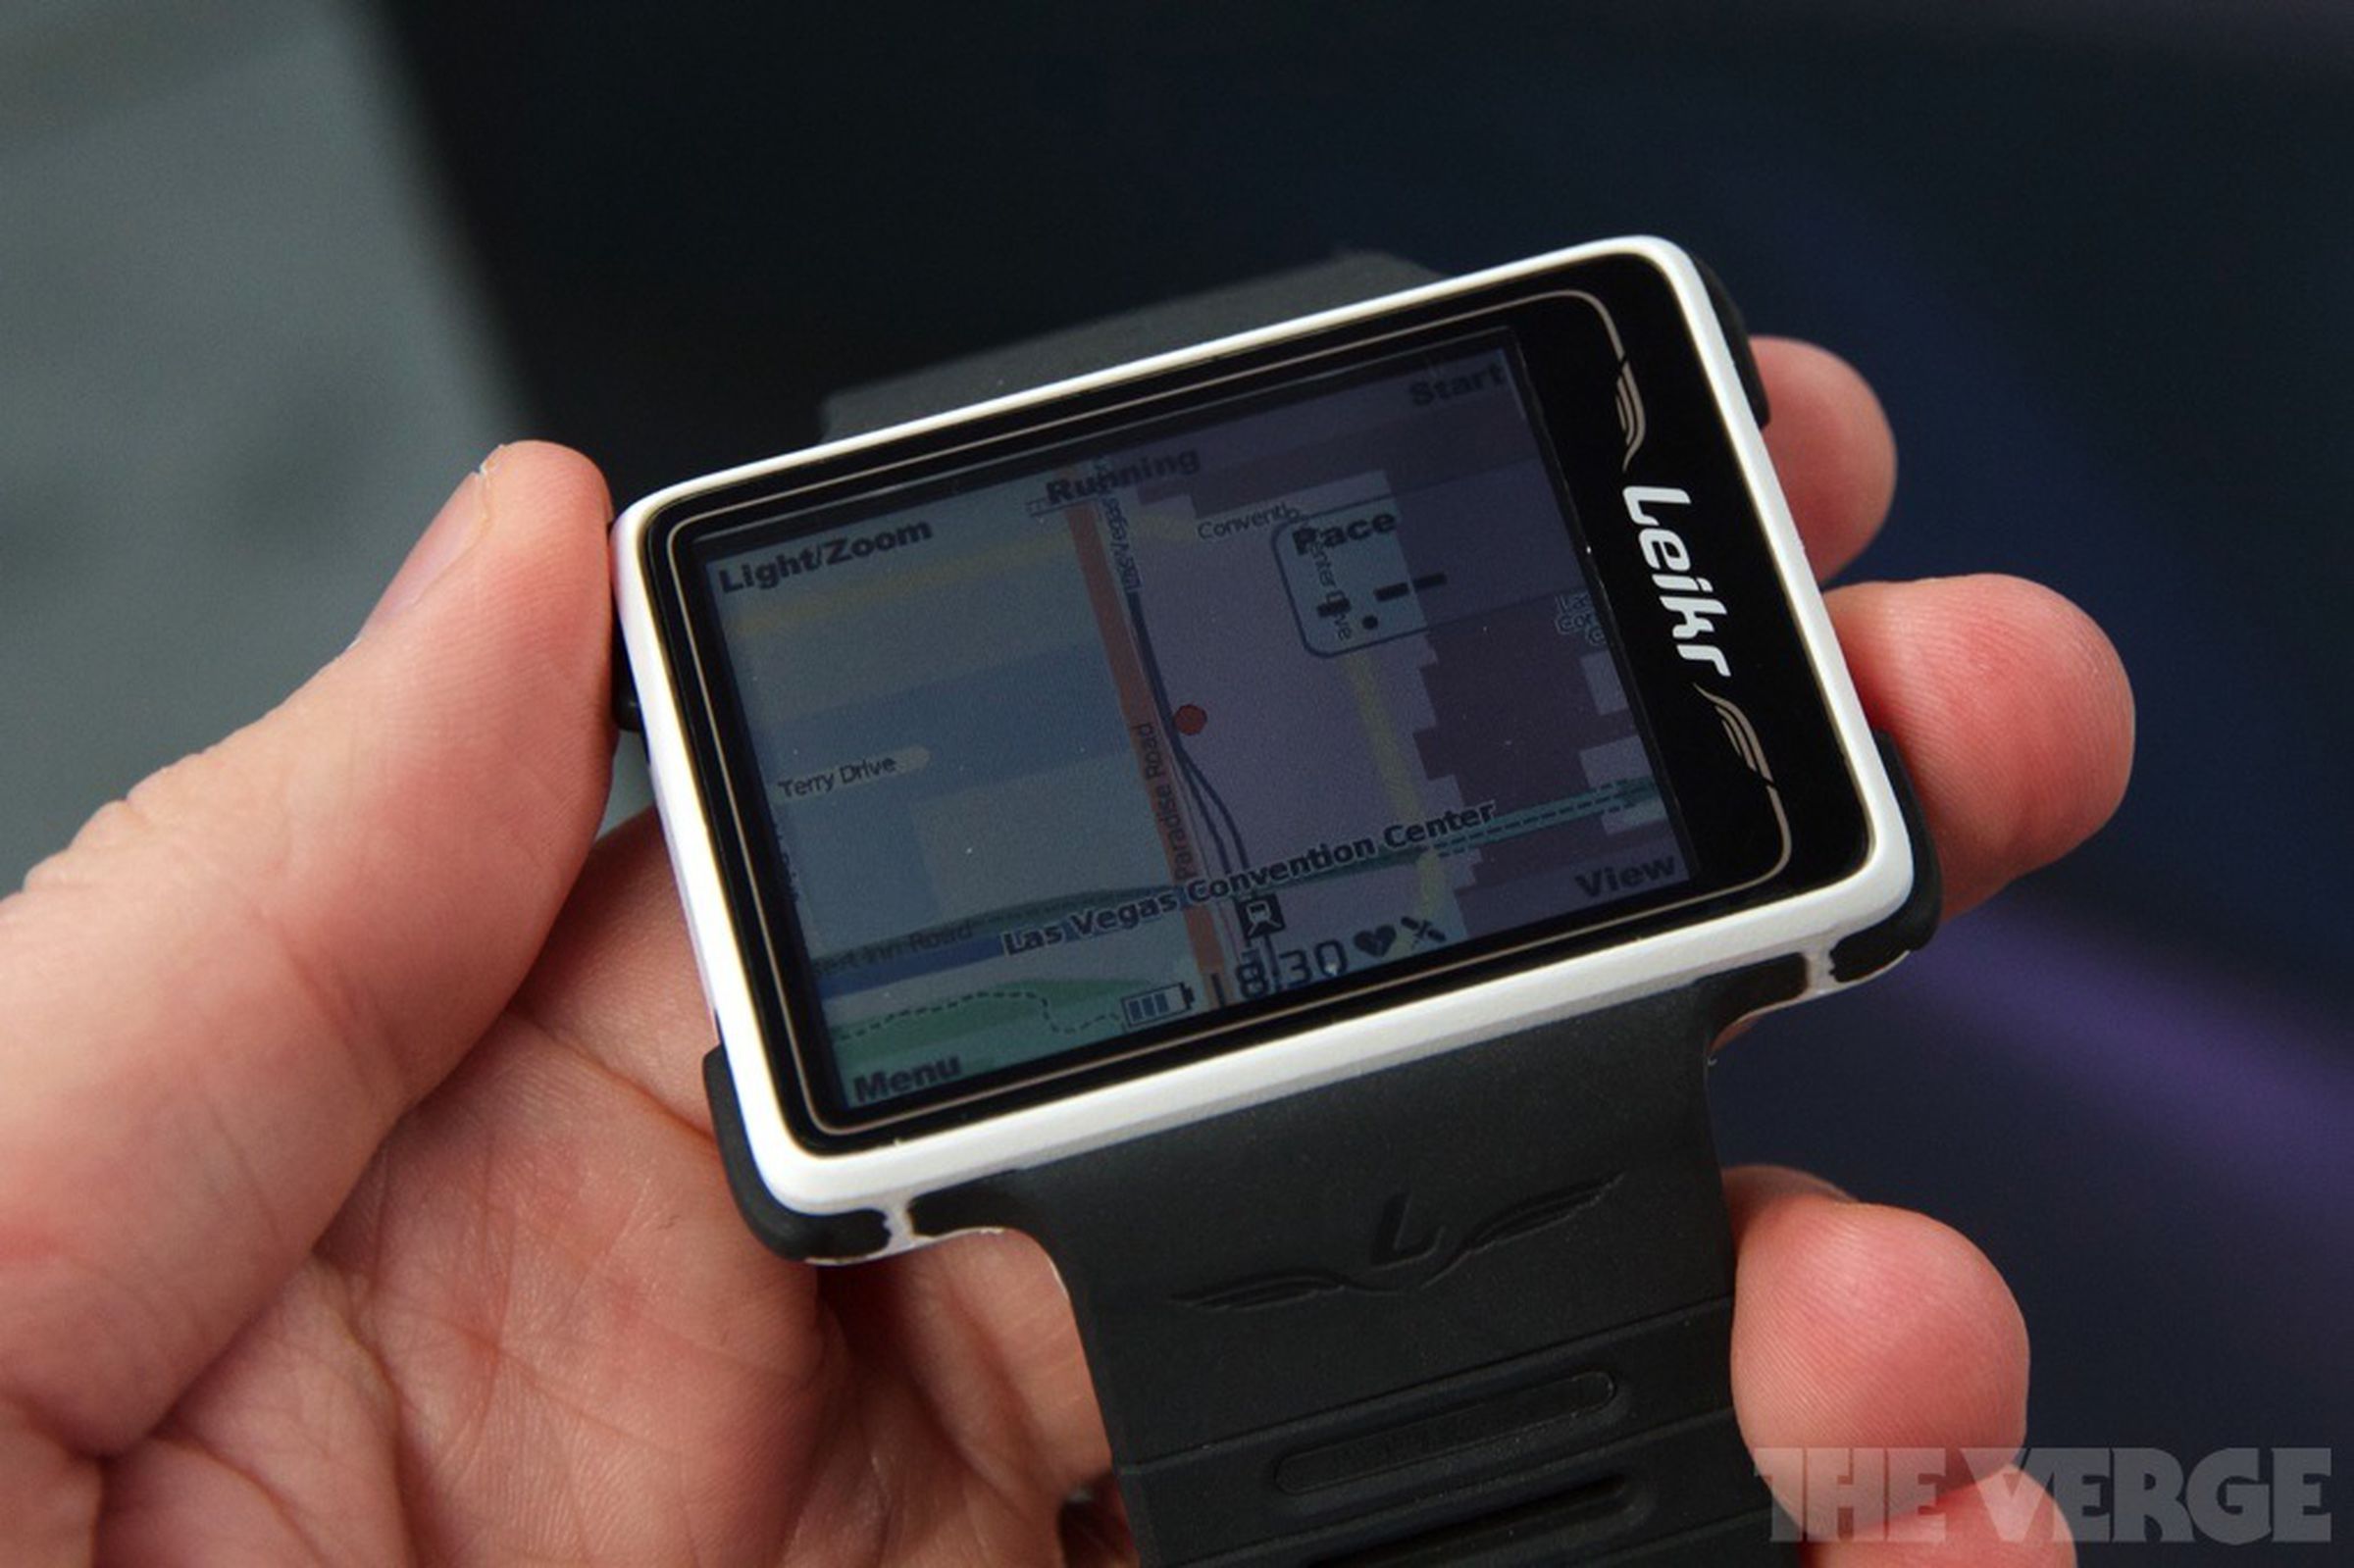 Leikr GPS sports watch hands-on photos